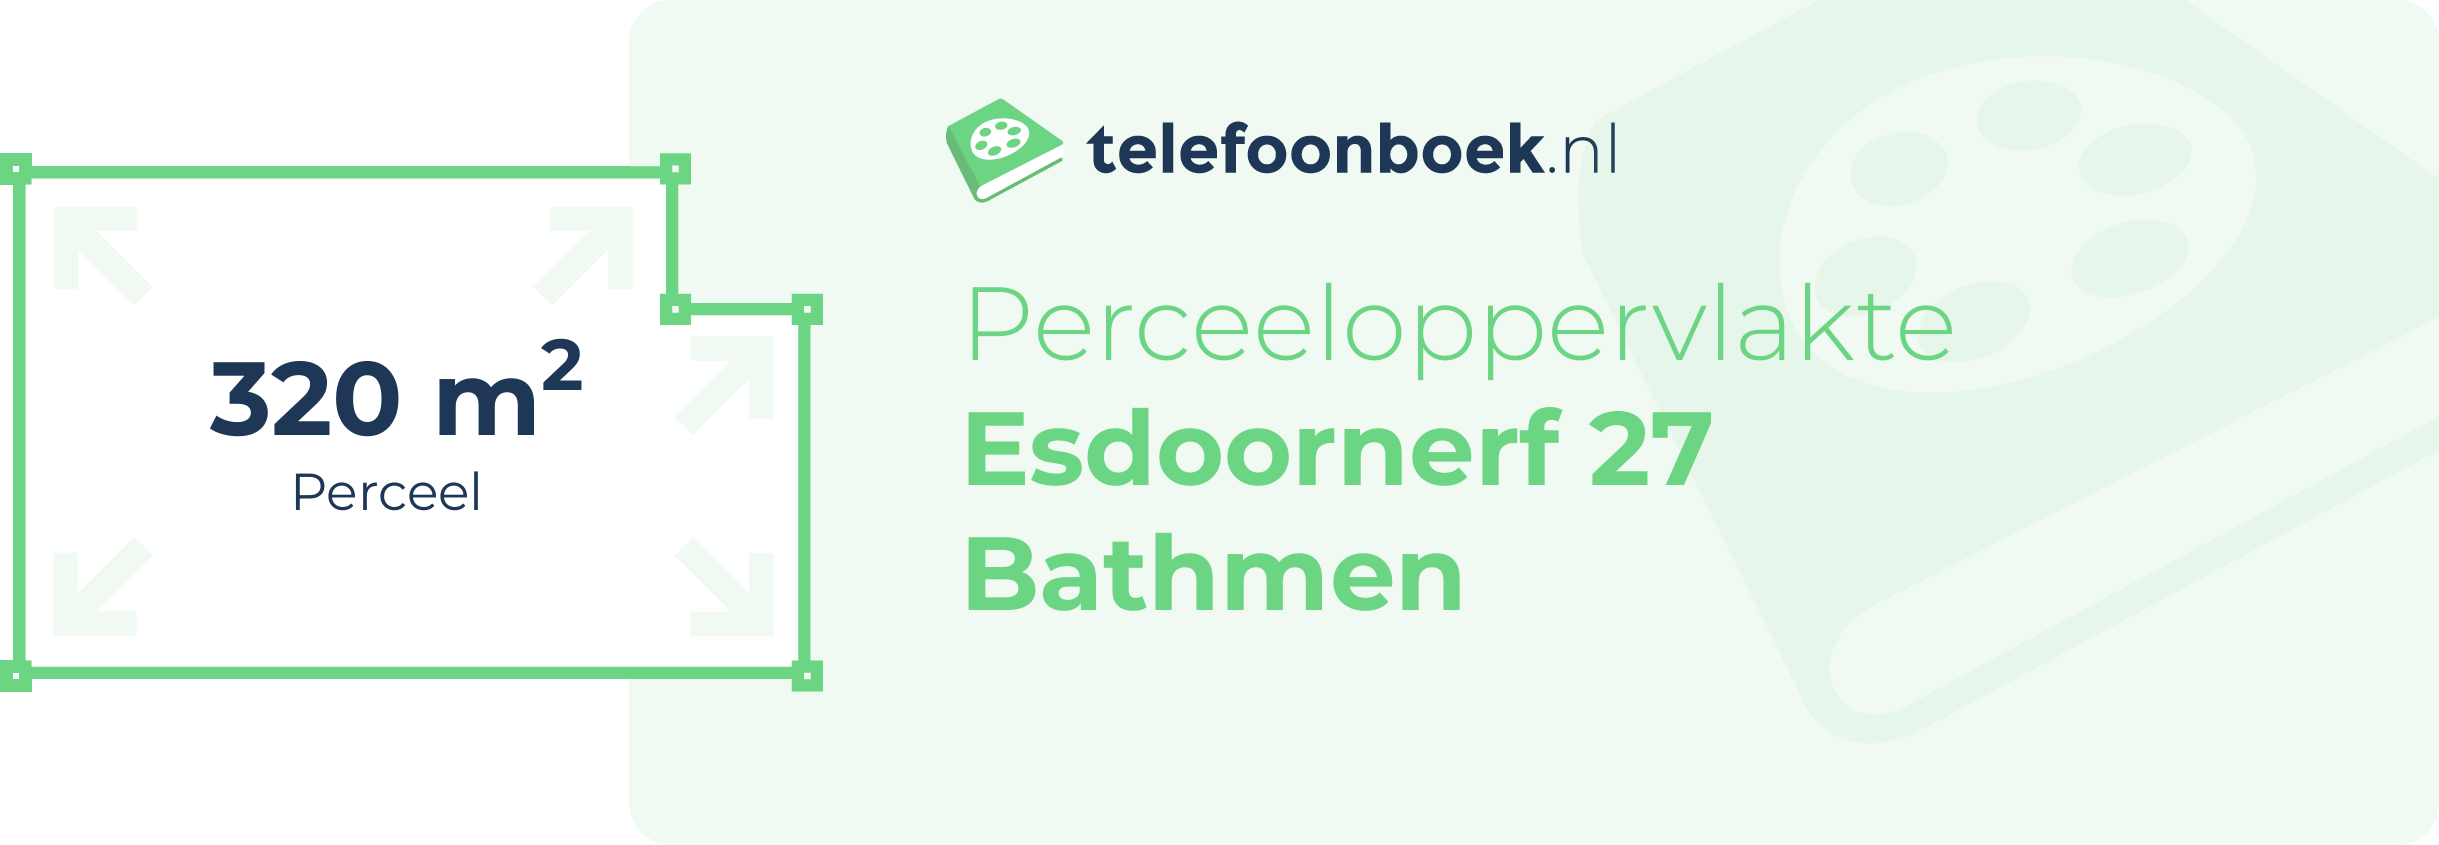 Perceeloppervlakte Esdoornerf 27 Bathmen